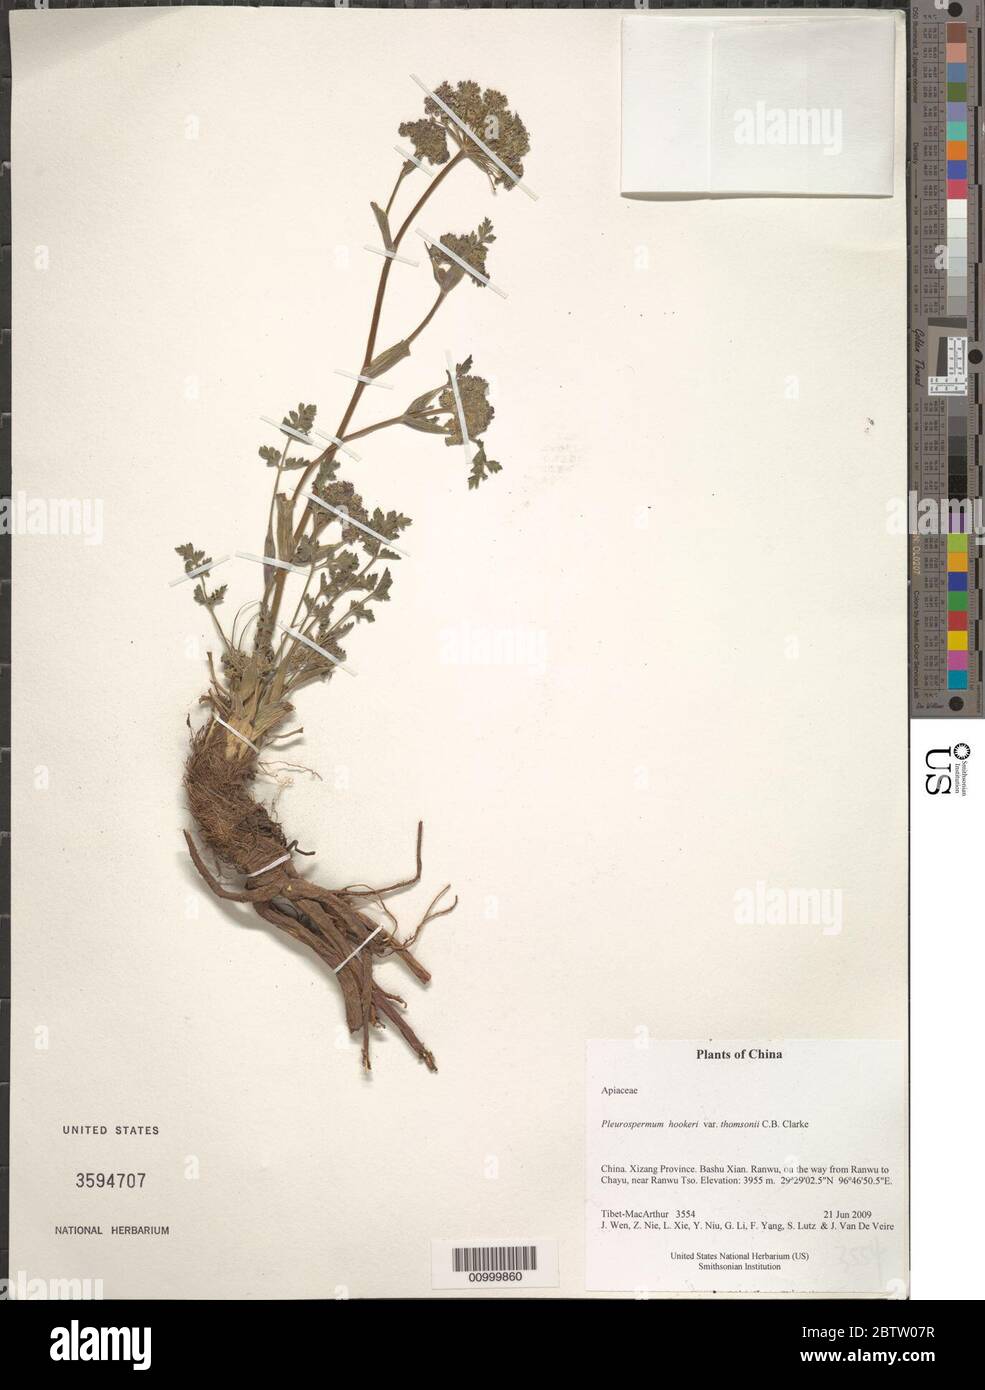 Pleurospermum hookeri var thomsonii CB Clarke. Stock Photo